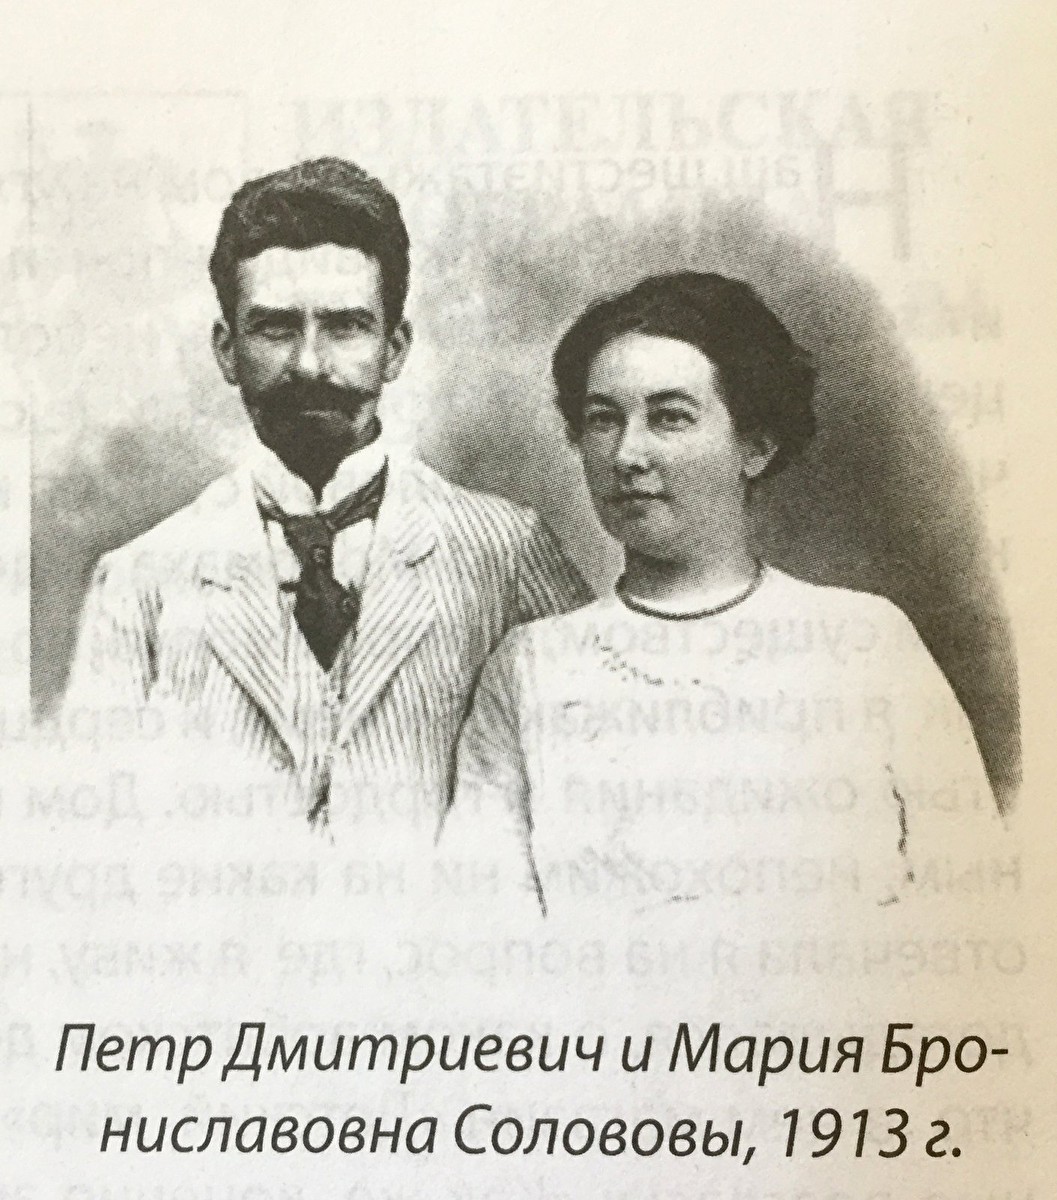 Петр Дмитриевич и Мария Брониславовна Соловово. Фото из книги М.С.Хлудовой «Арбатская сага» (Москва, 2010);